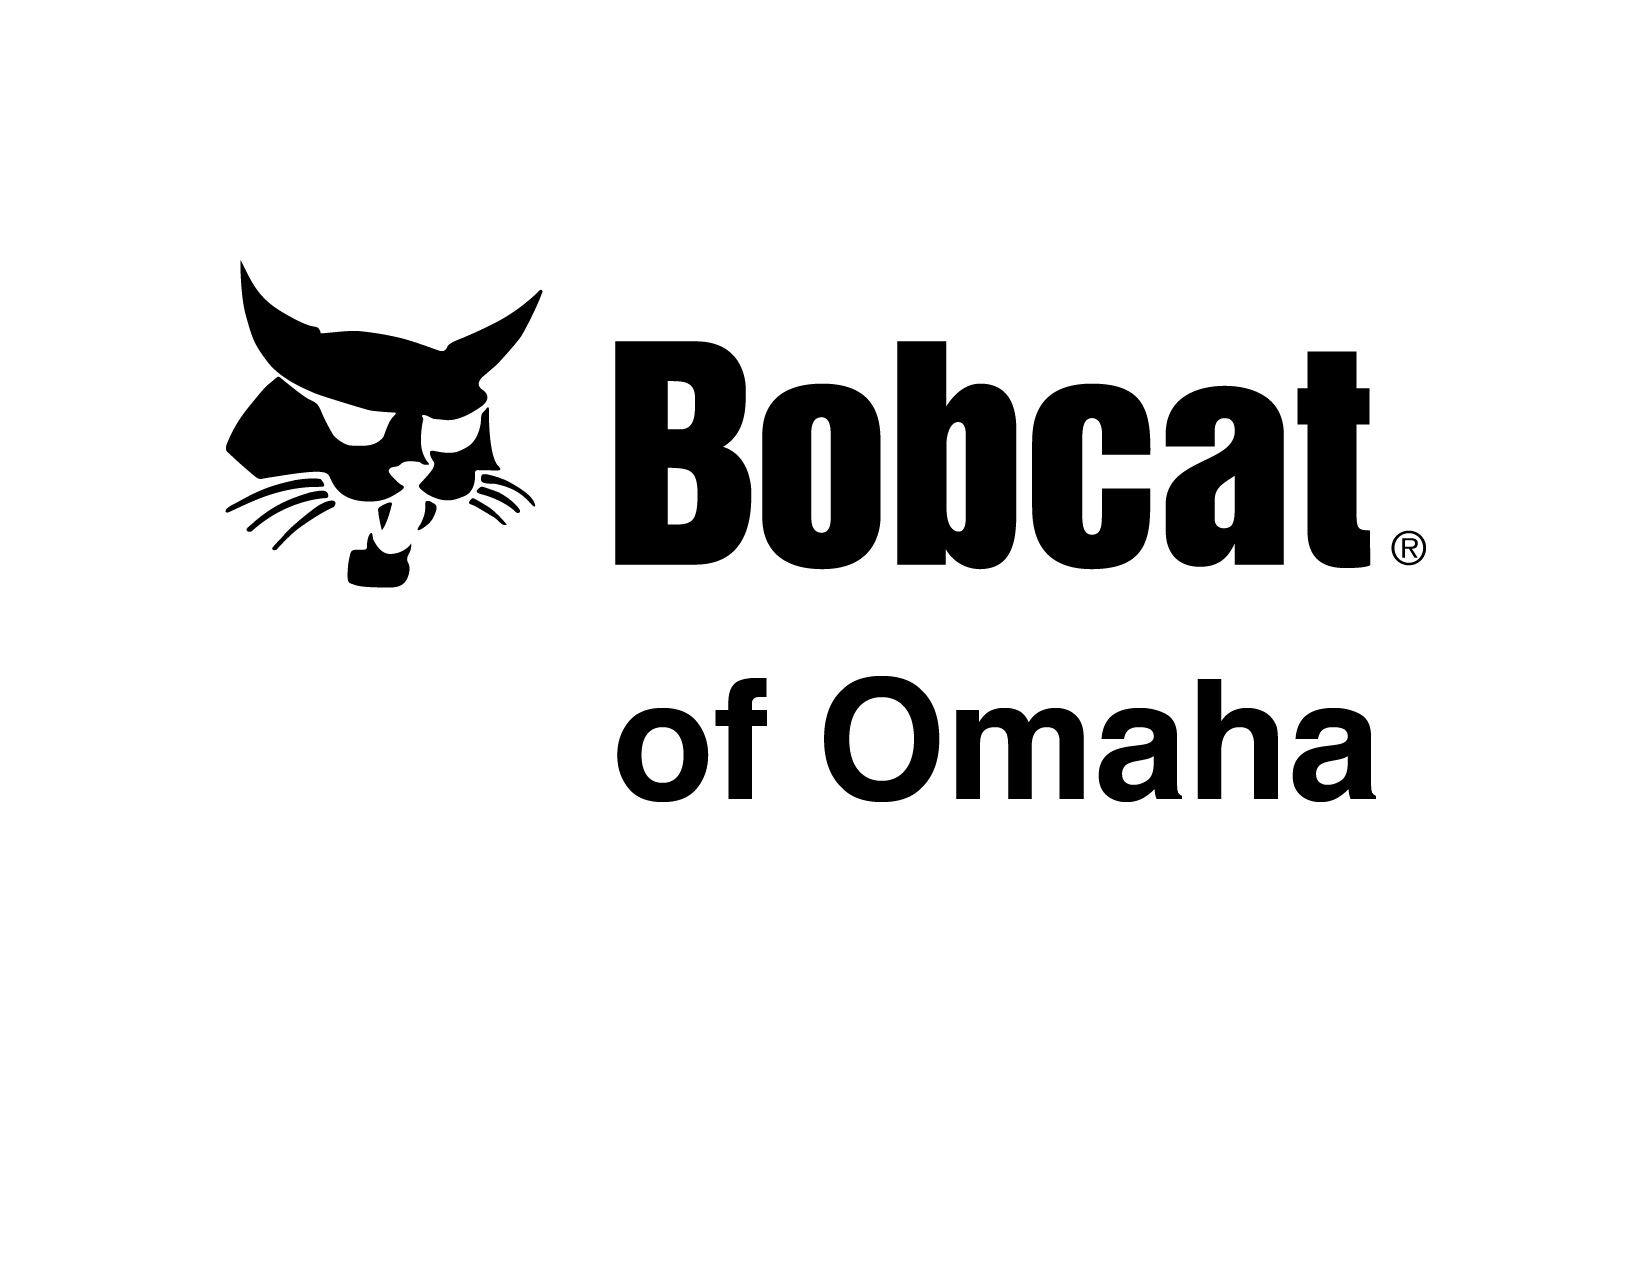 Bobcat Of Omaha